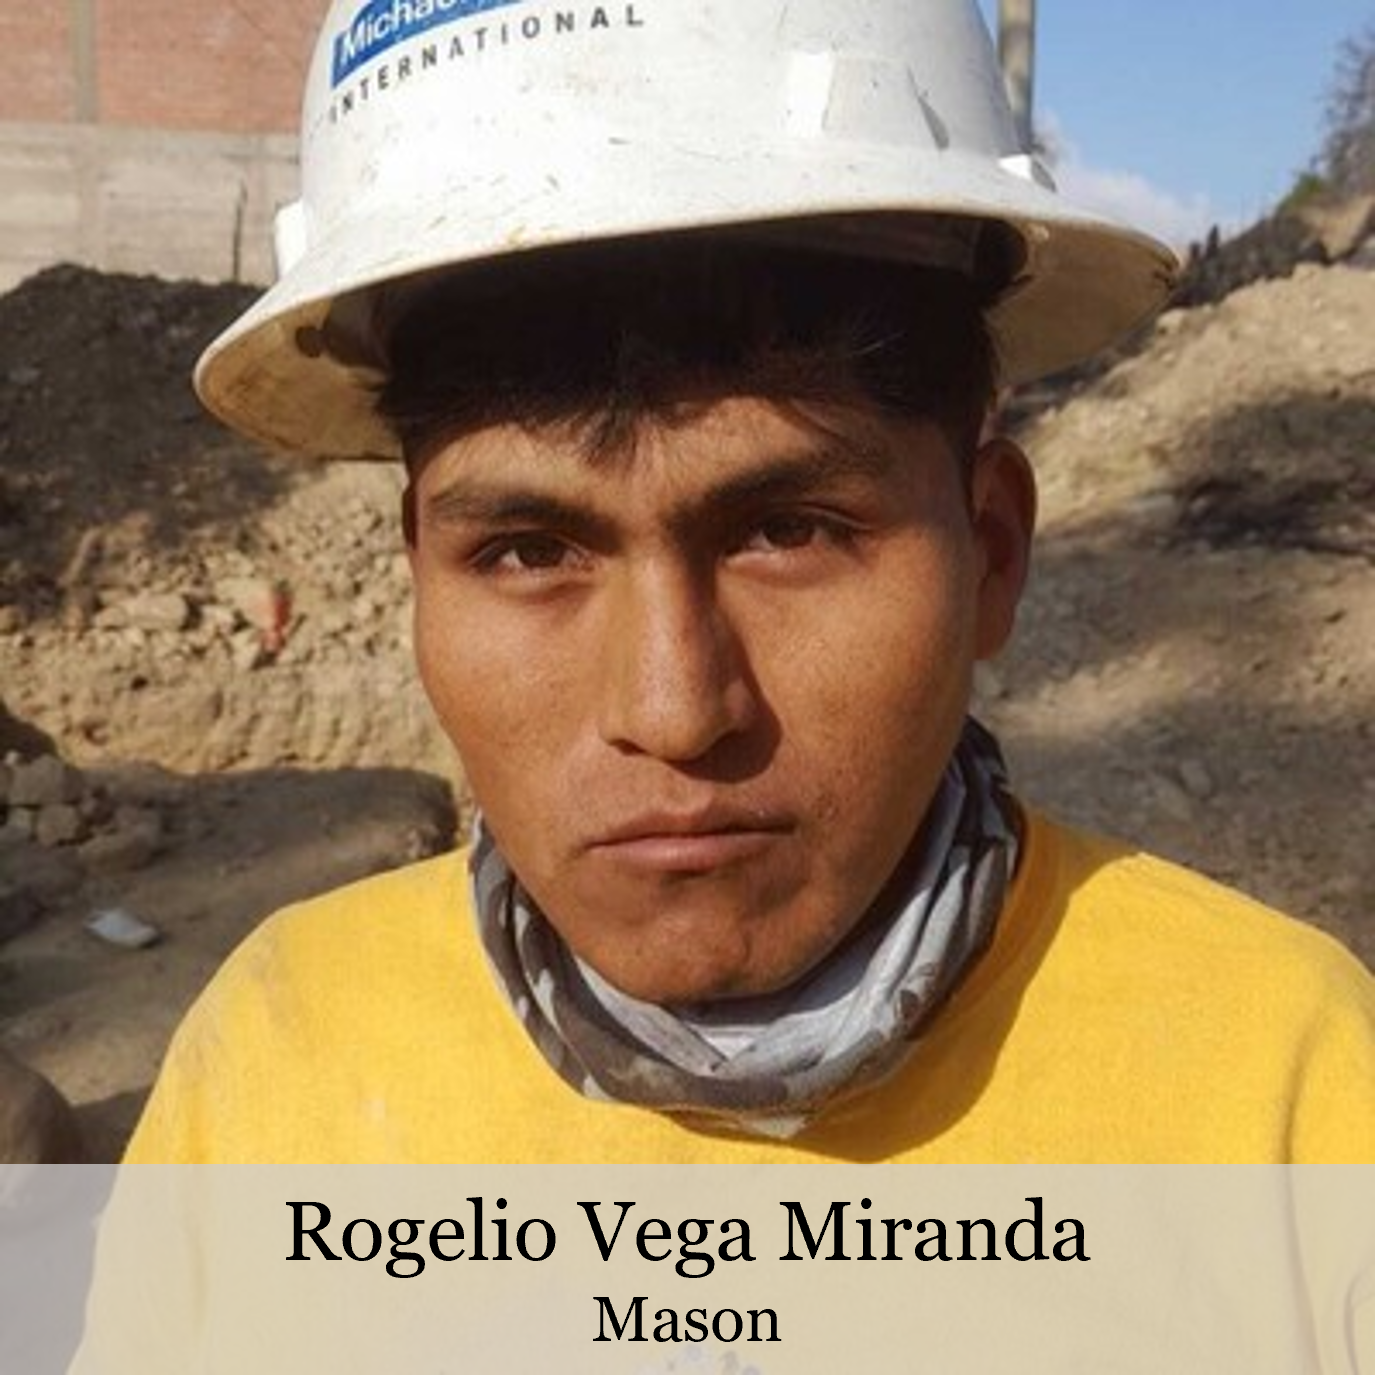 Rogelio Vega Miranda_400x400_Update 1.png